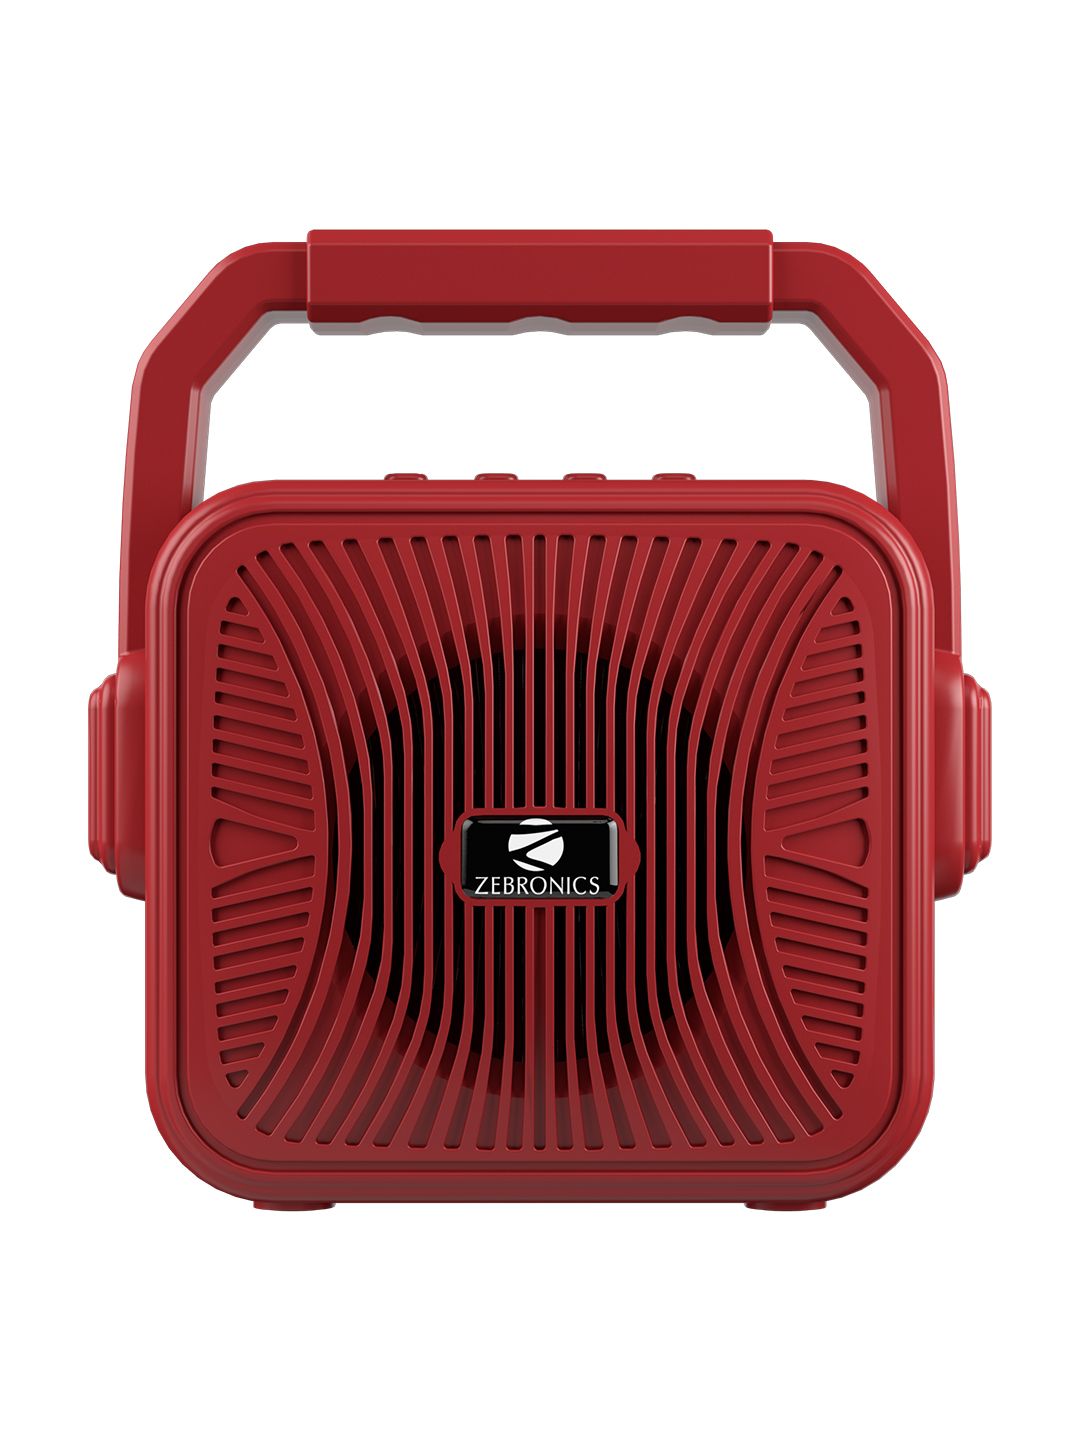 ZEBRONICS ZEB - County 2 Bluetooth Speaker - Red Price in India